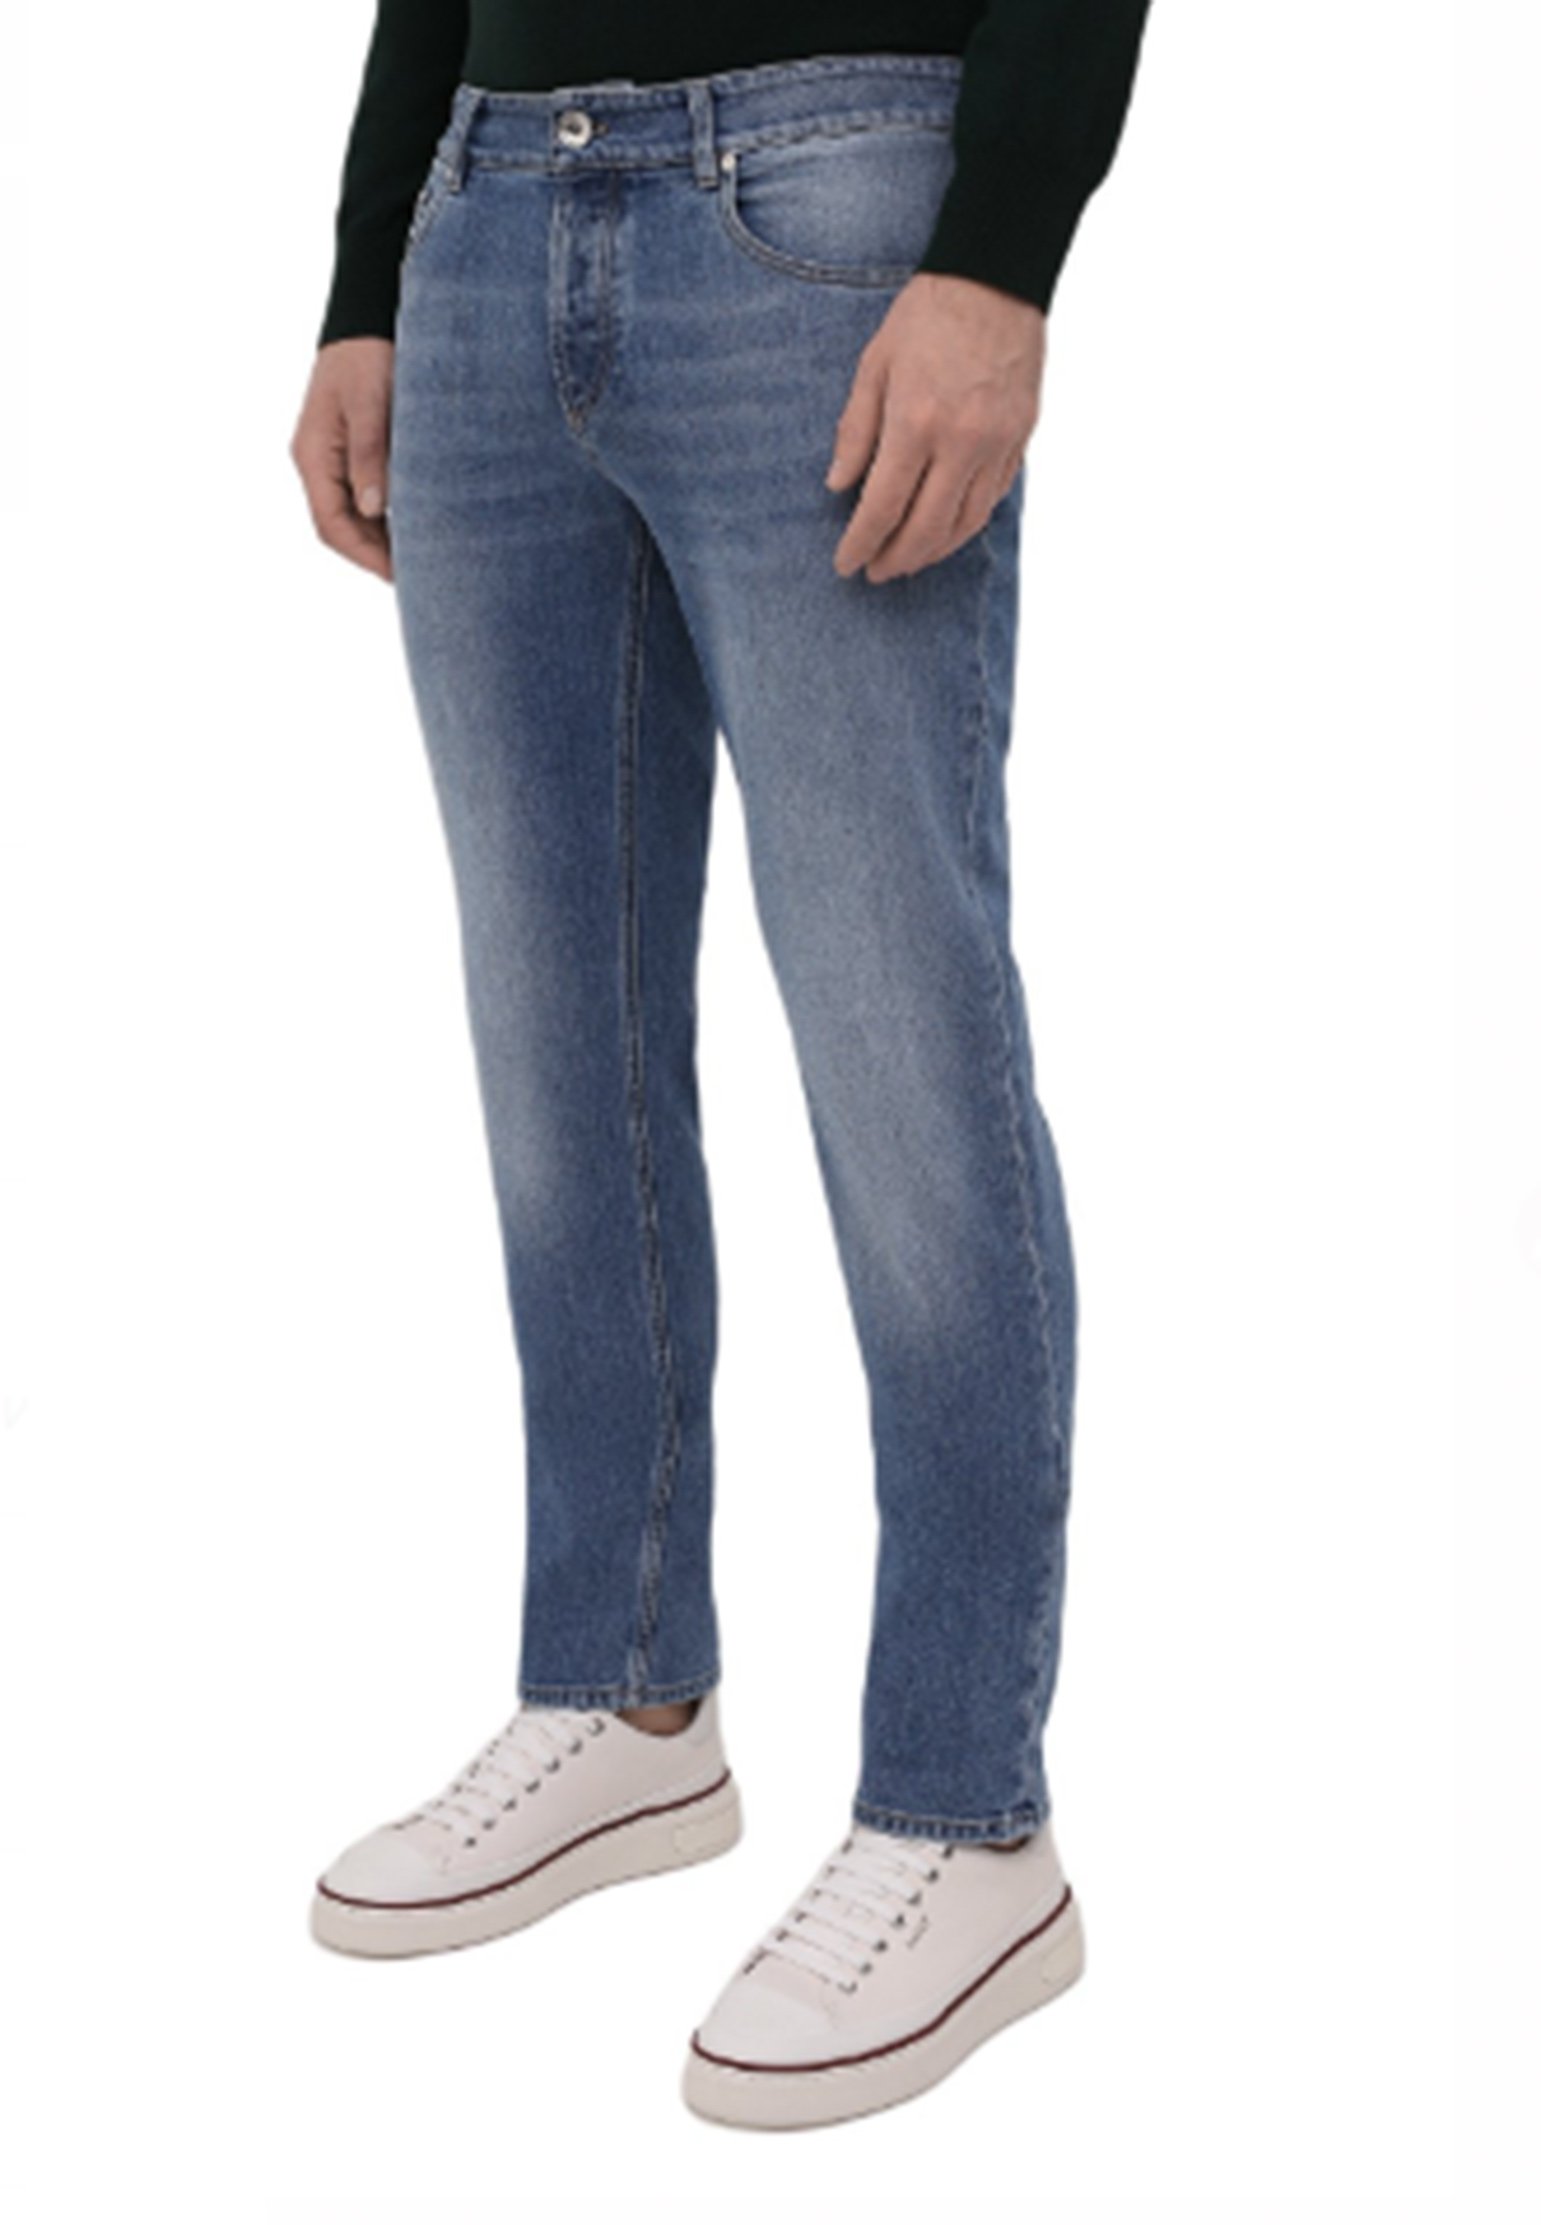 Pantalone BRUNELLO CUCINELLI Color: navy blue (Code: 1209) in online store Allure